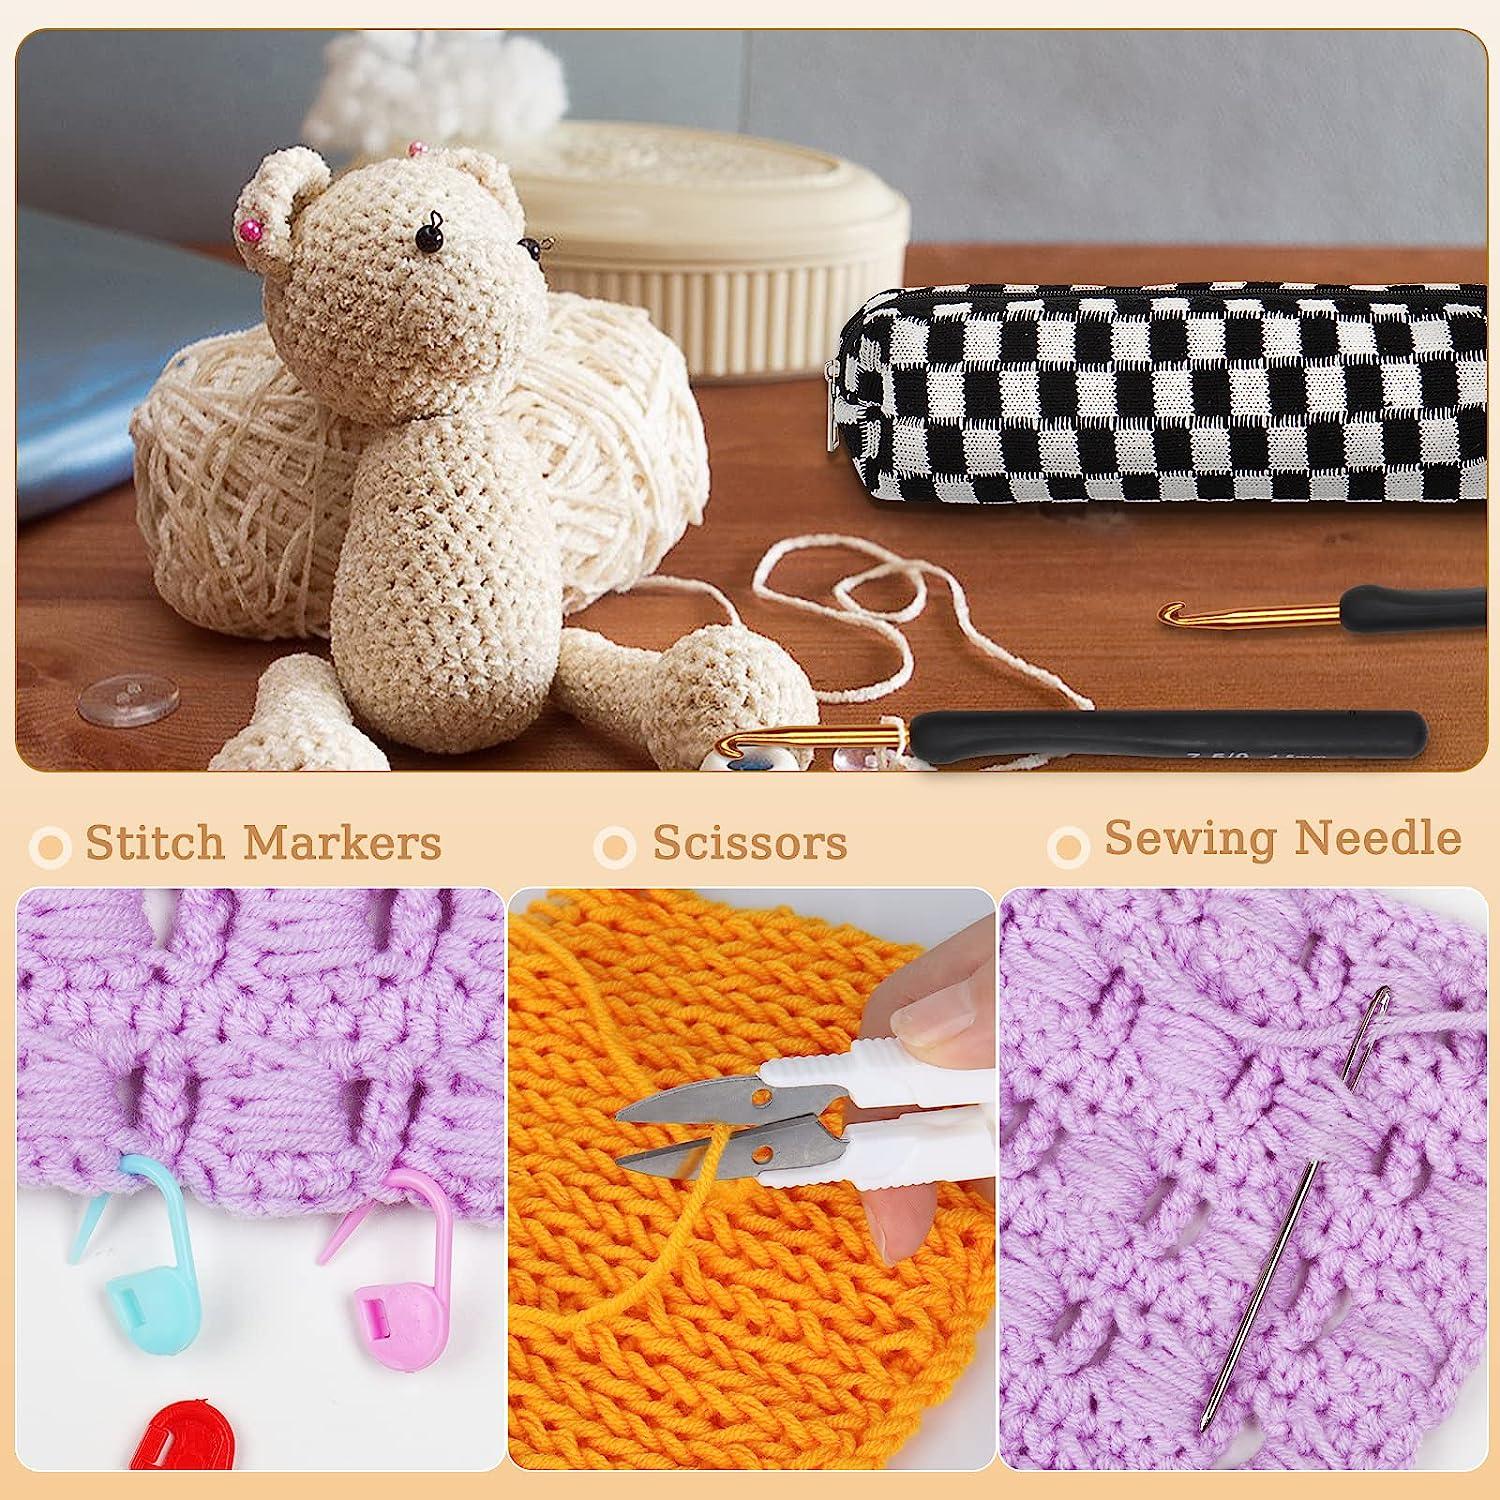 Aeelike Tunisian Crochet Kit for Beginners Adults, Starter Afghan Crochet  Hooks Kit with Yarn, 11pcs 2mm to 8mm Aluminum Afghan Hooks Craft Set and